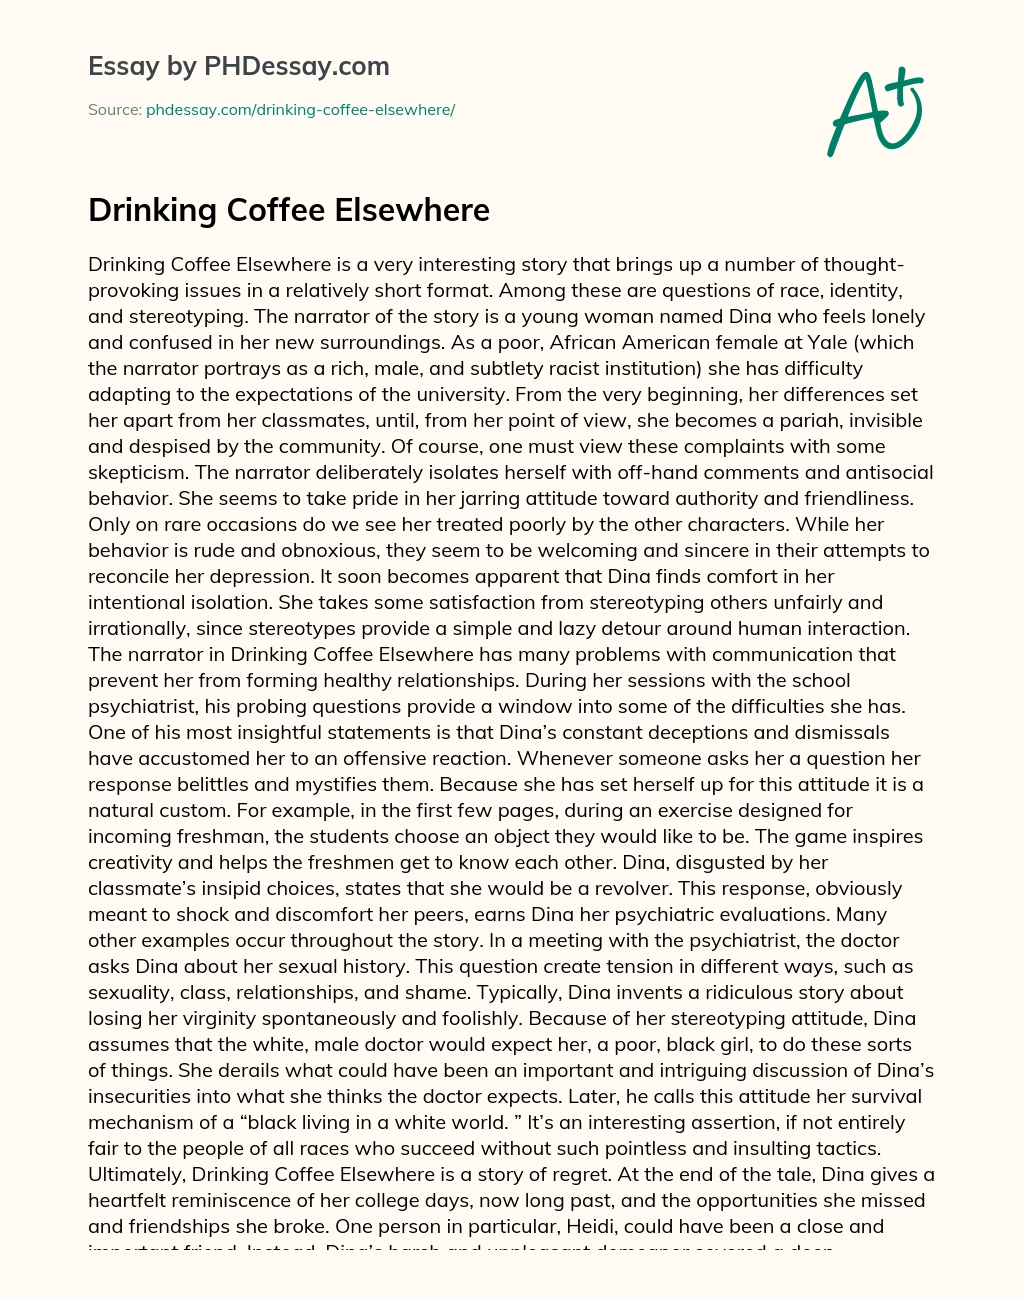 Drinking Coffee Elsewhere essay